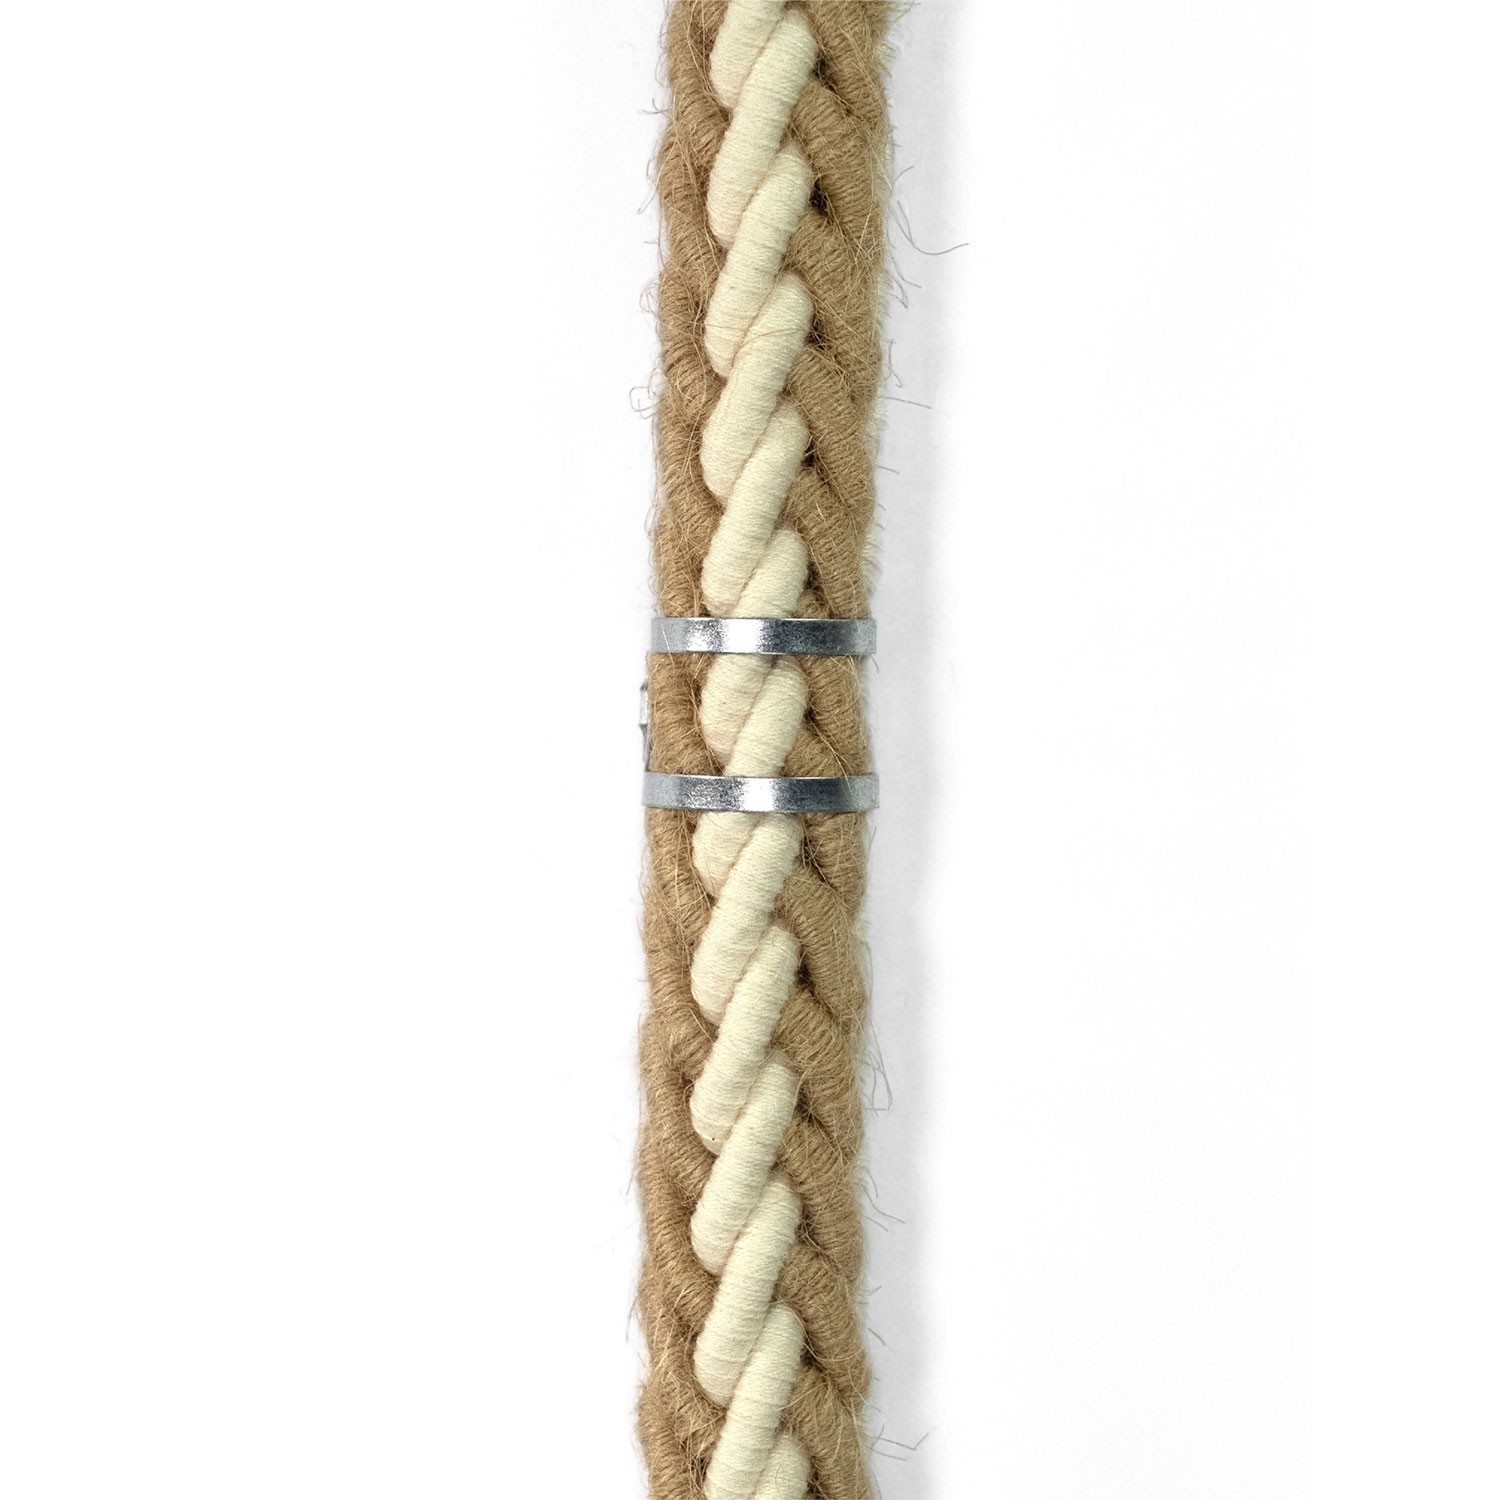 SnakeBis Cordon - Lampe plug-in avec cordon tressé en jute